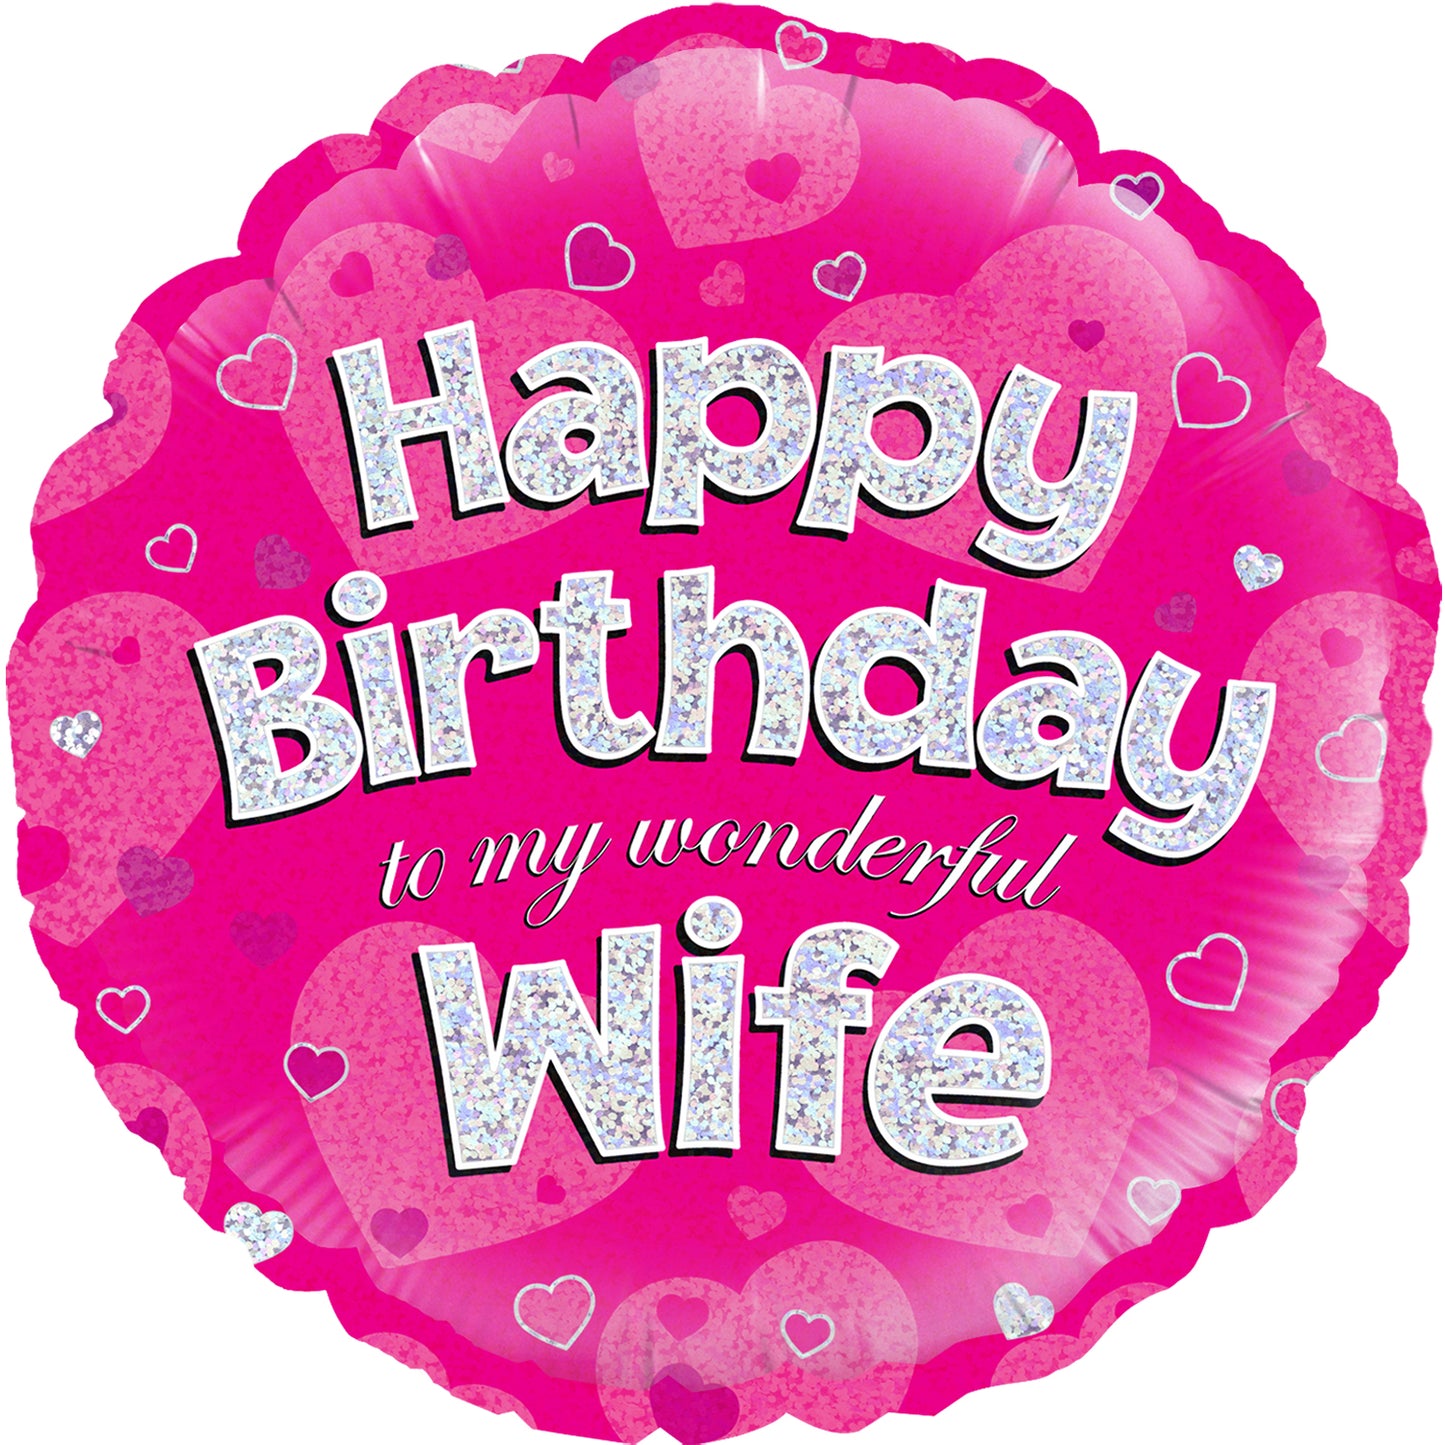 Happy Birthday Wife Balloon